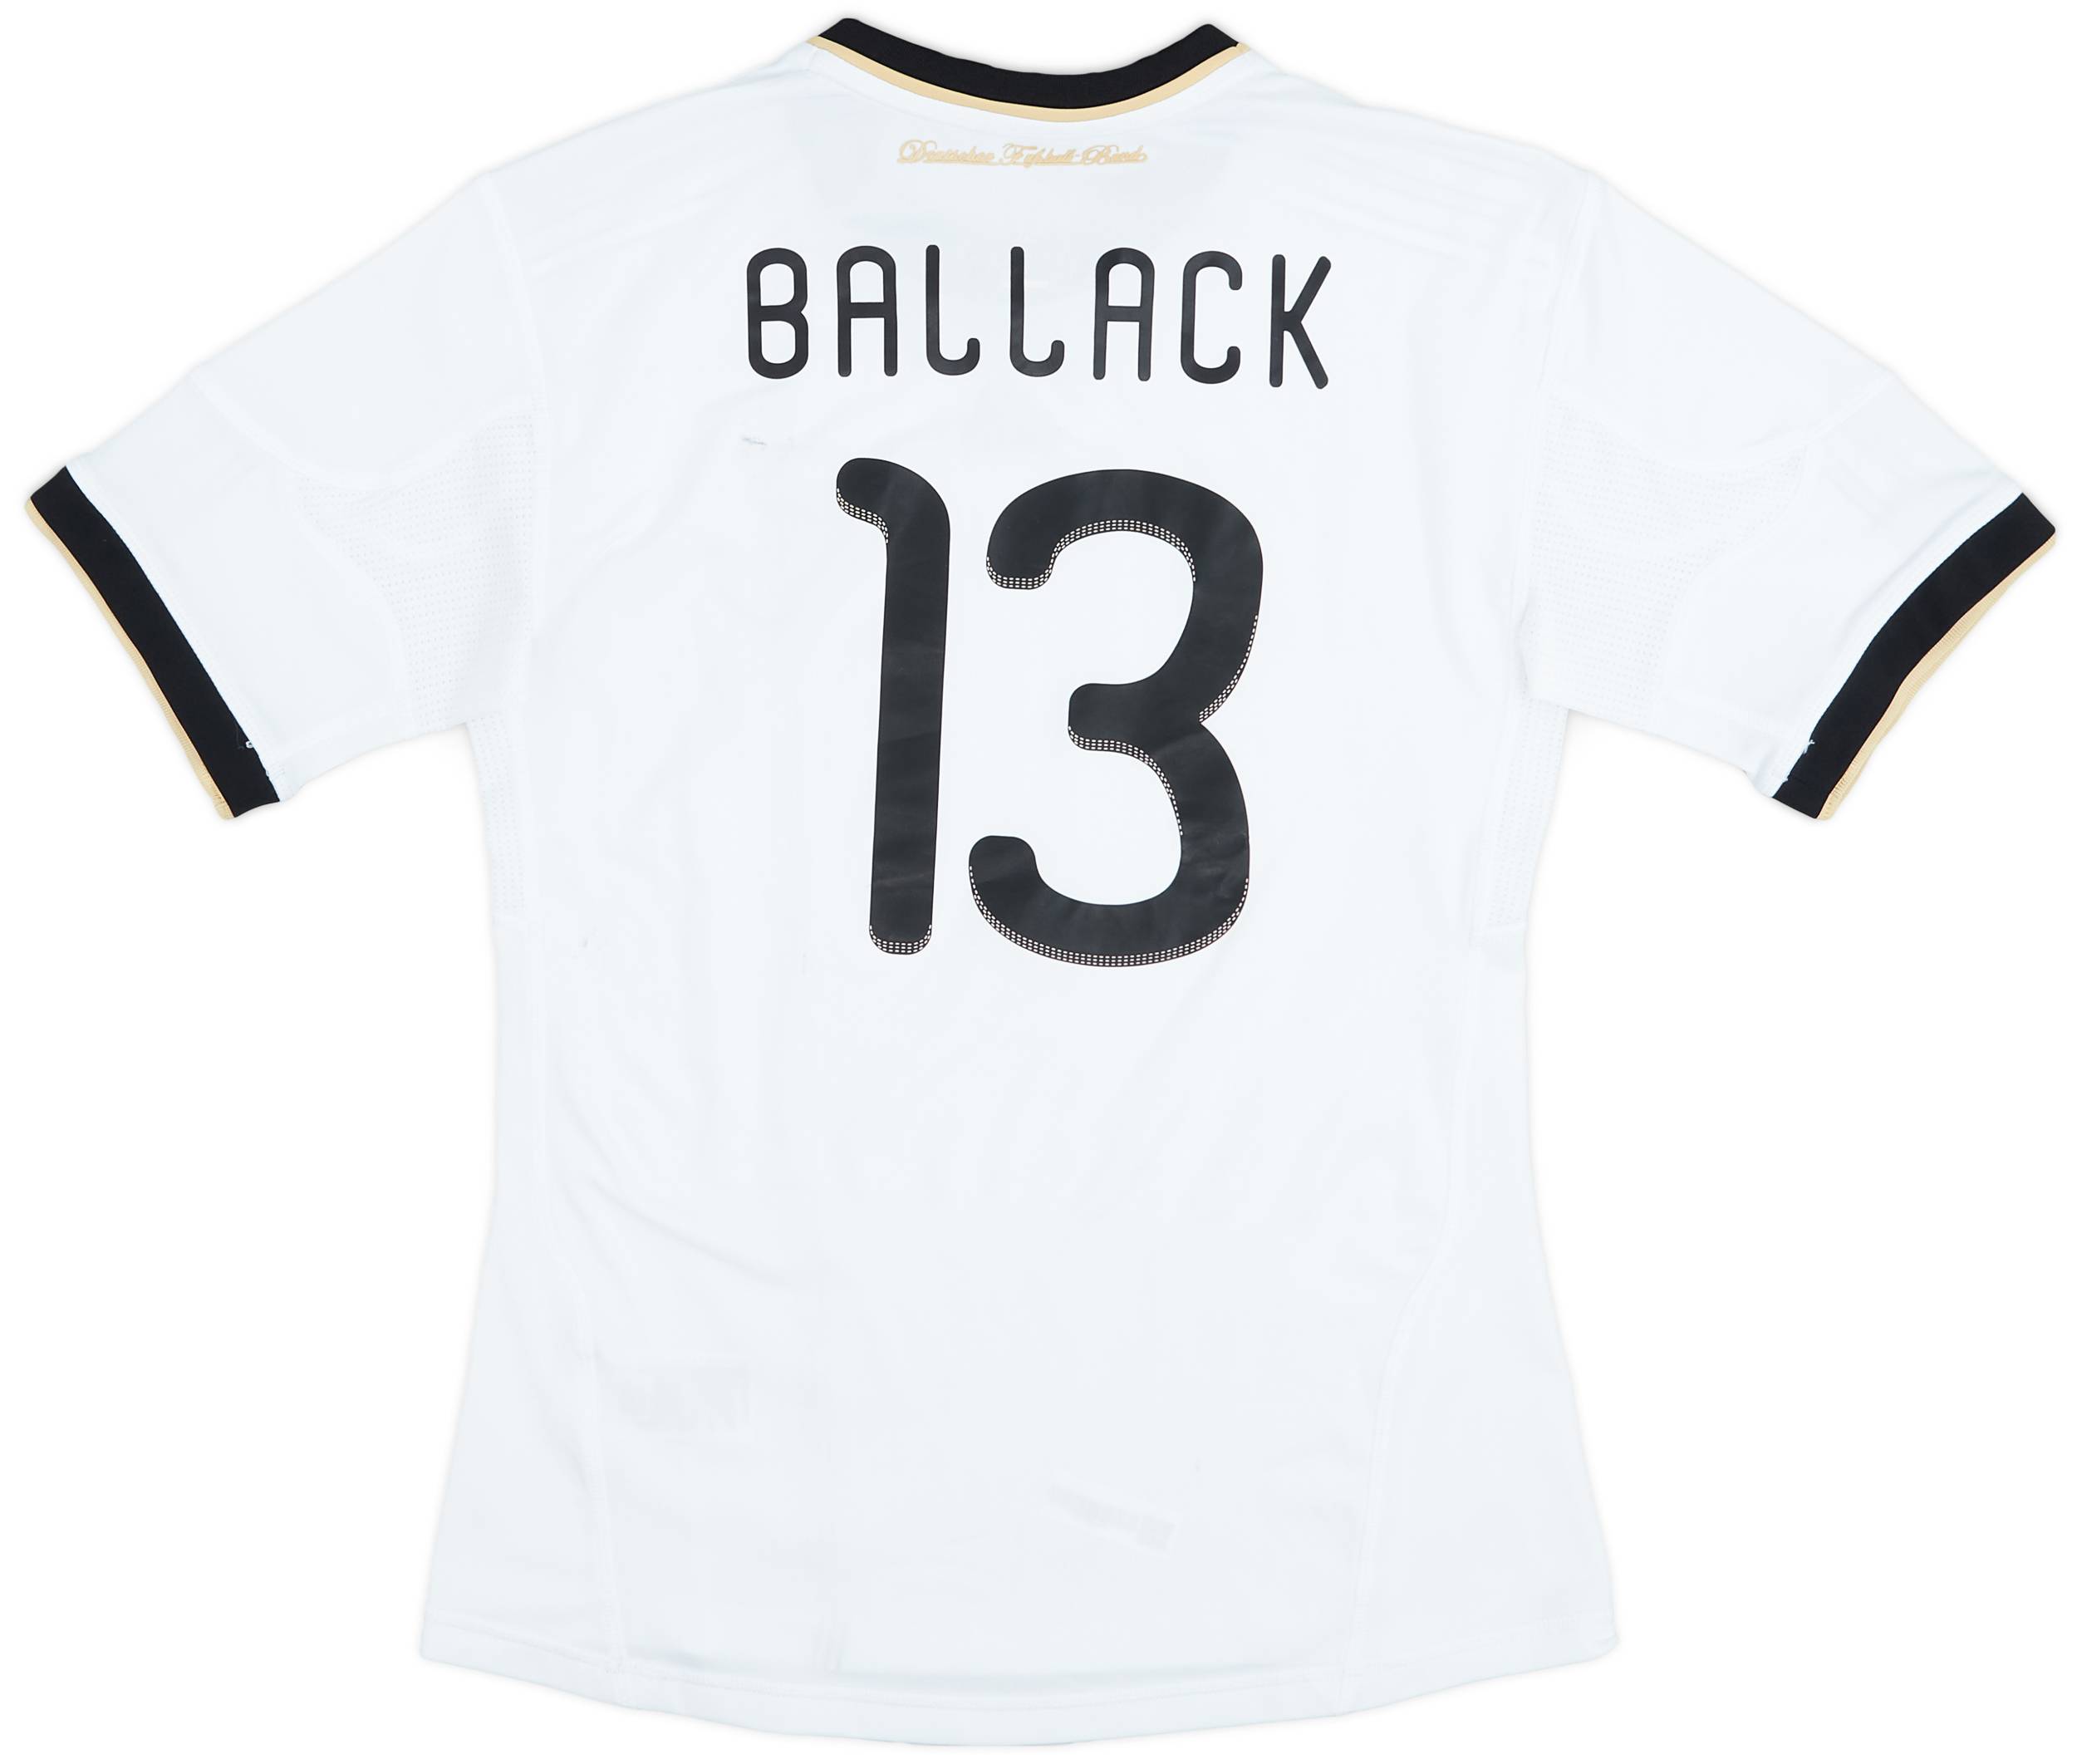 2010-11 Germany Home Shirt Ballack #13 - 6/10 - (S)